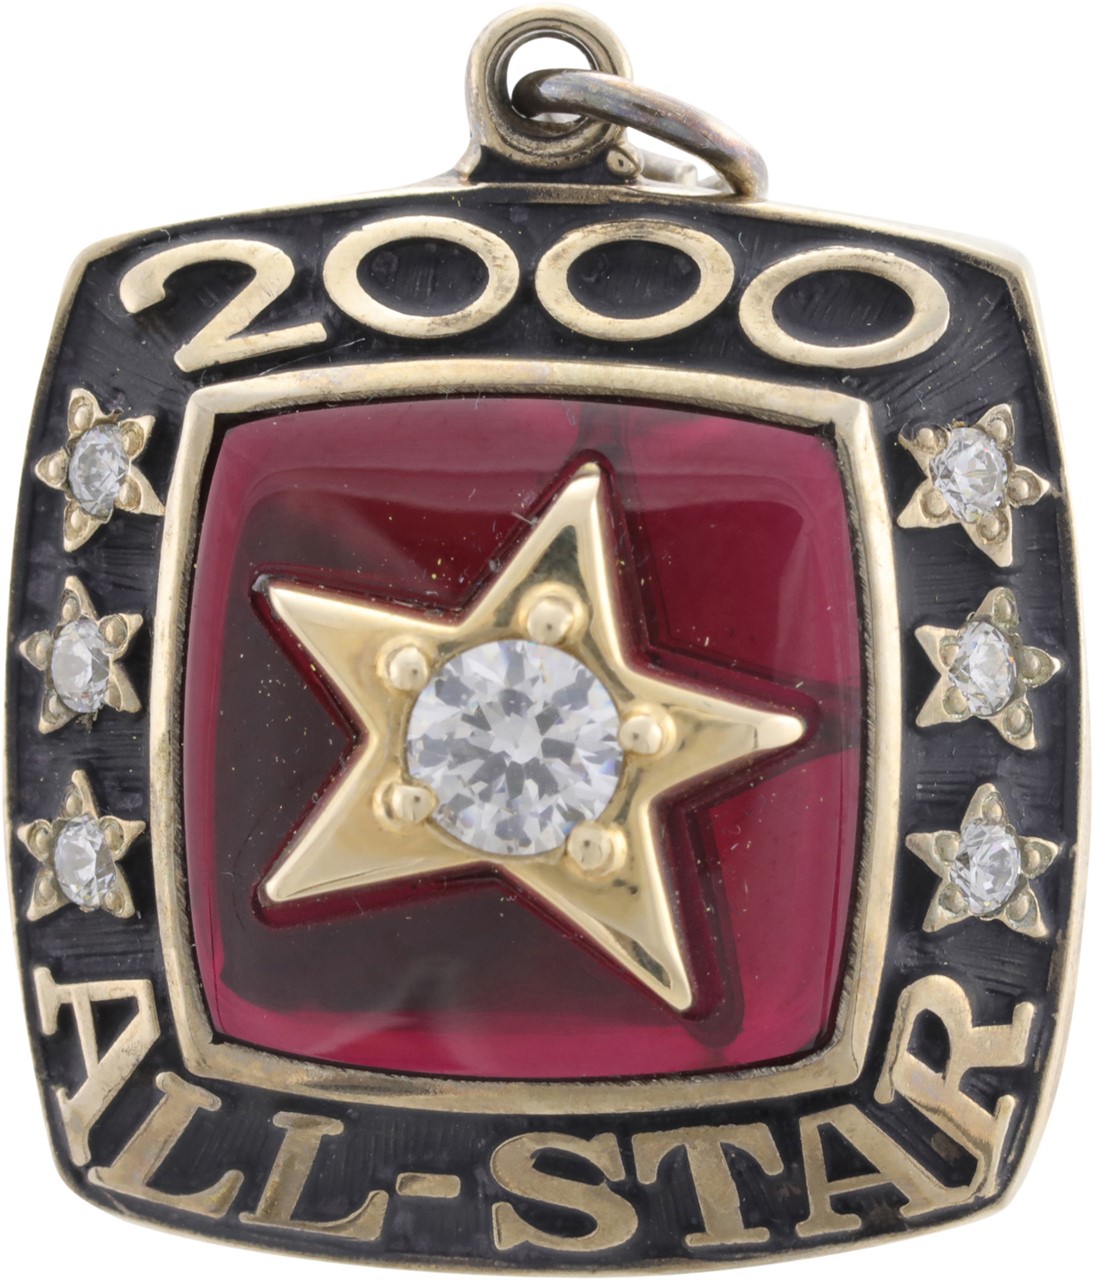 - 2000 MLB All-Star Game Charm